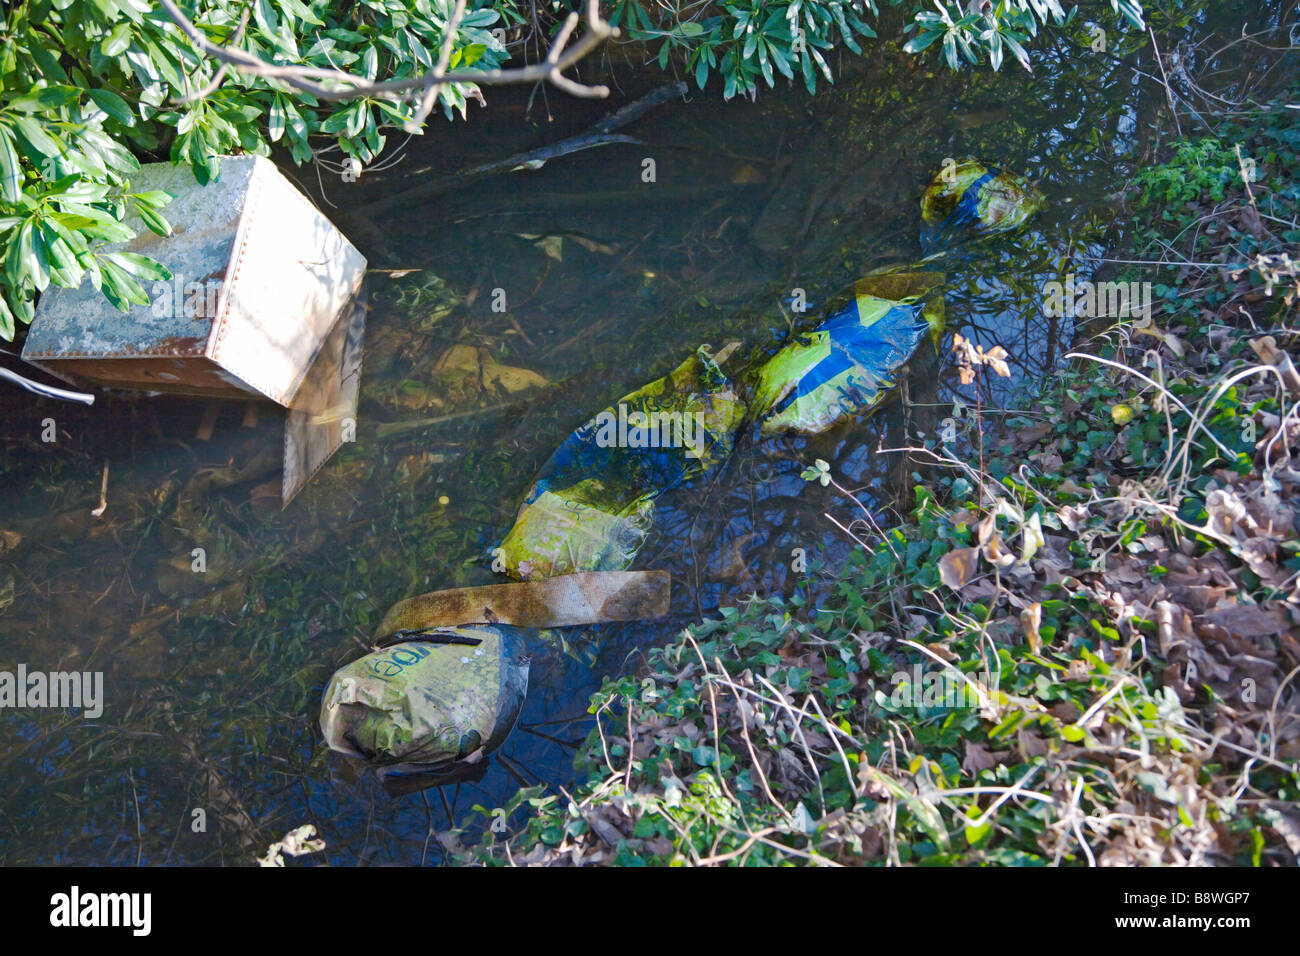 Rubbish dumped in a stream. Borders of Dorset and Hampshire. UK. Stock Photo